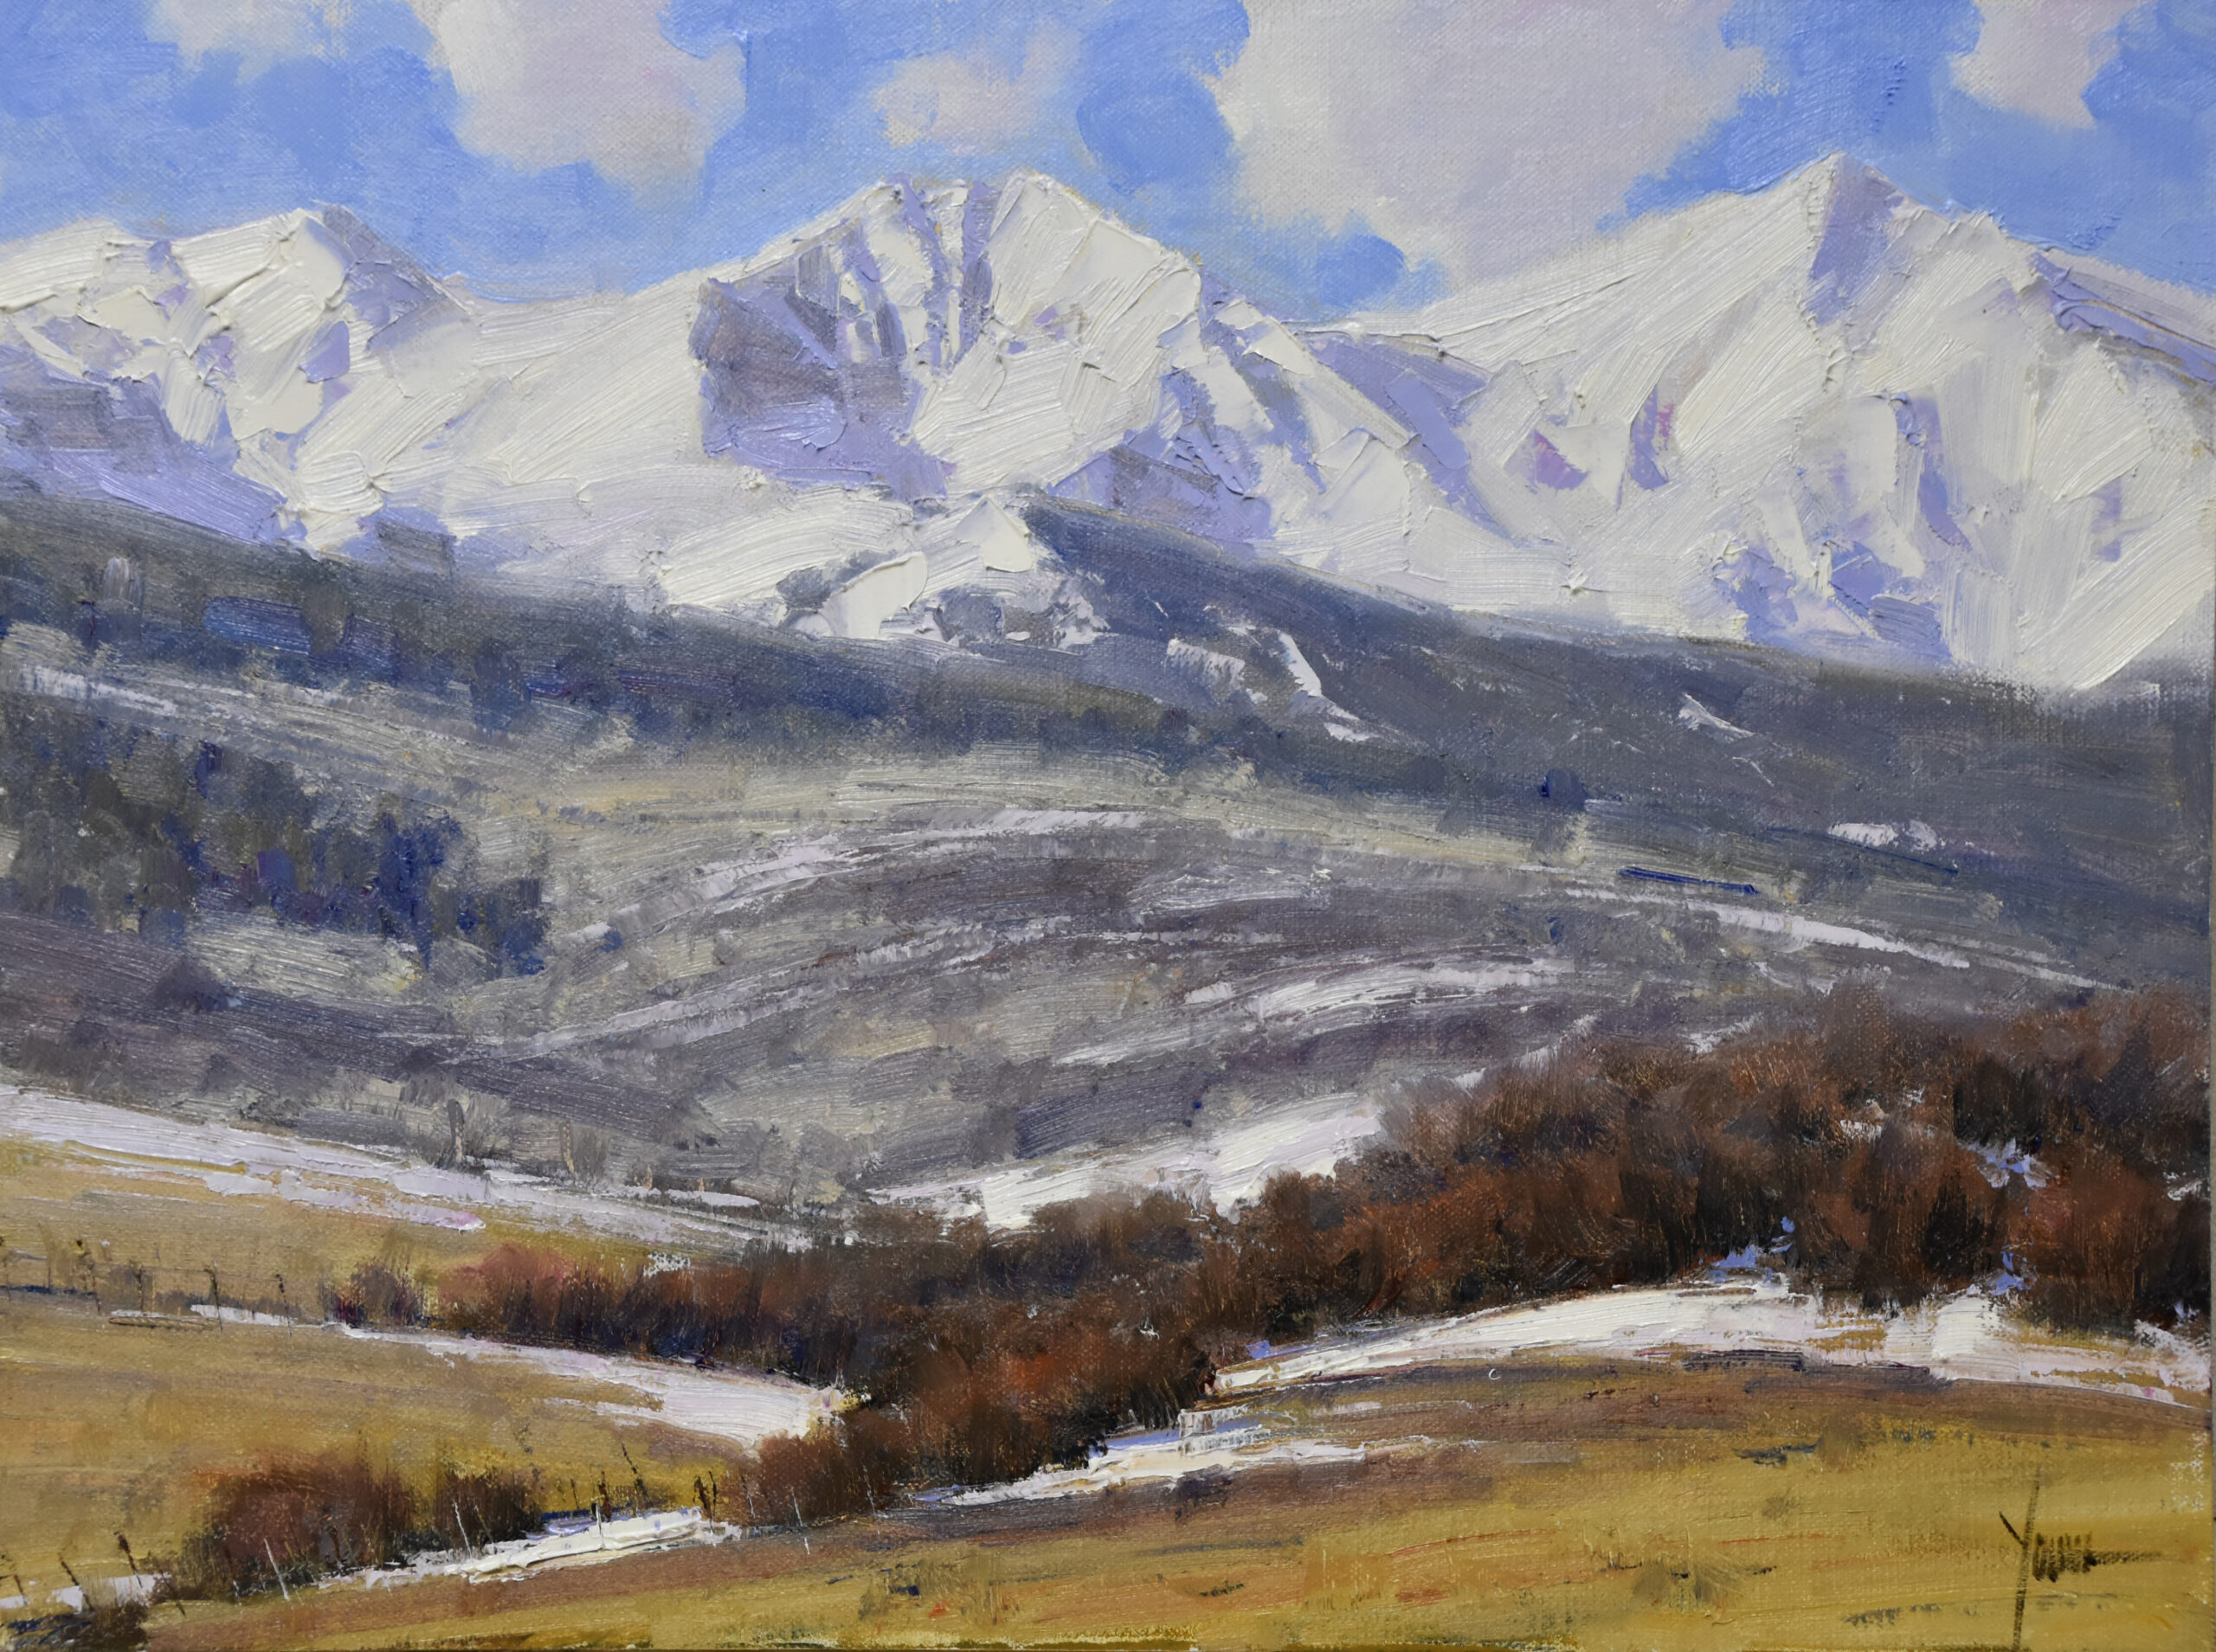 Dan Young - Late Winter at Sopris Mountain Ranch